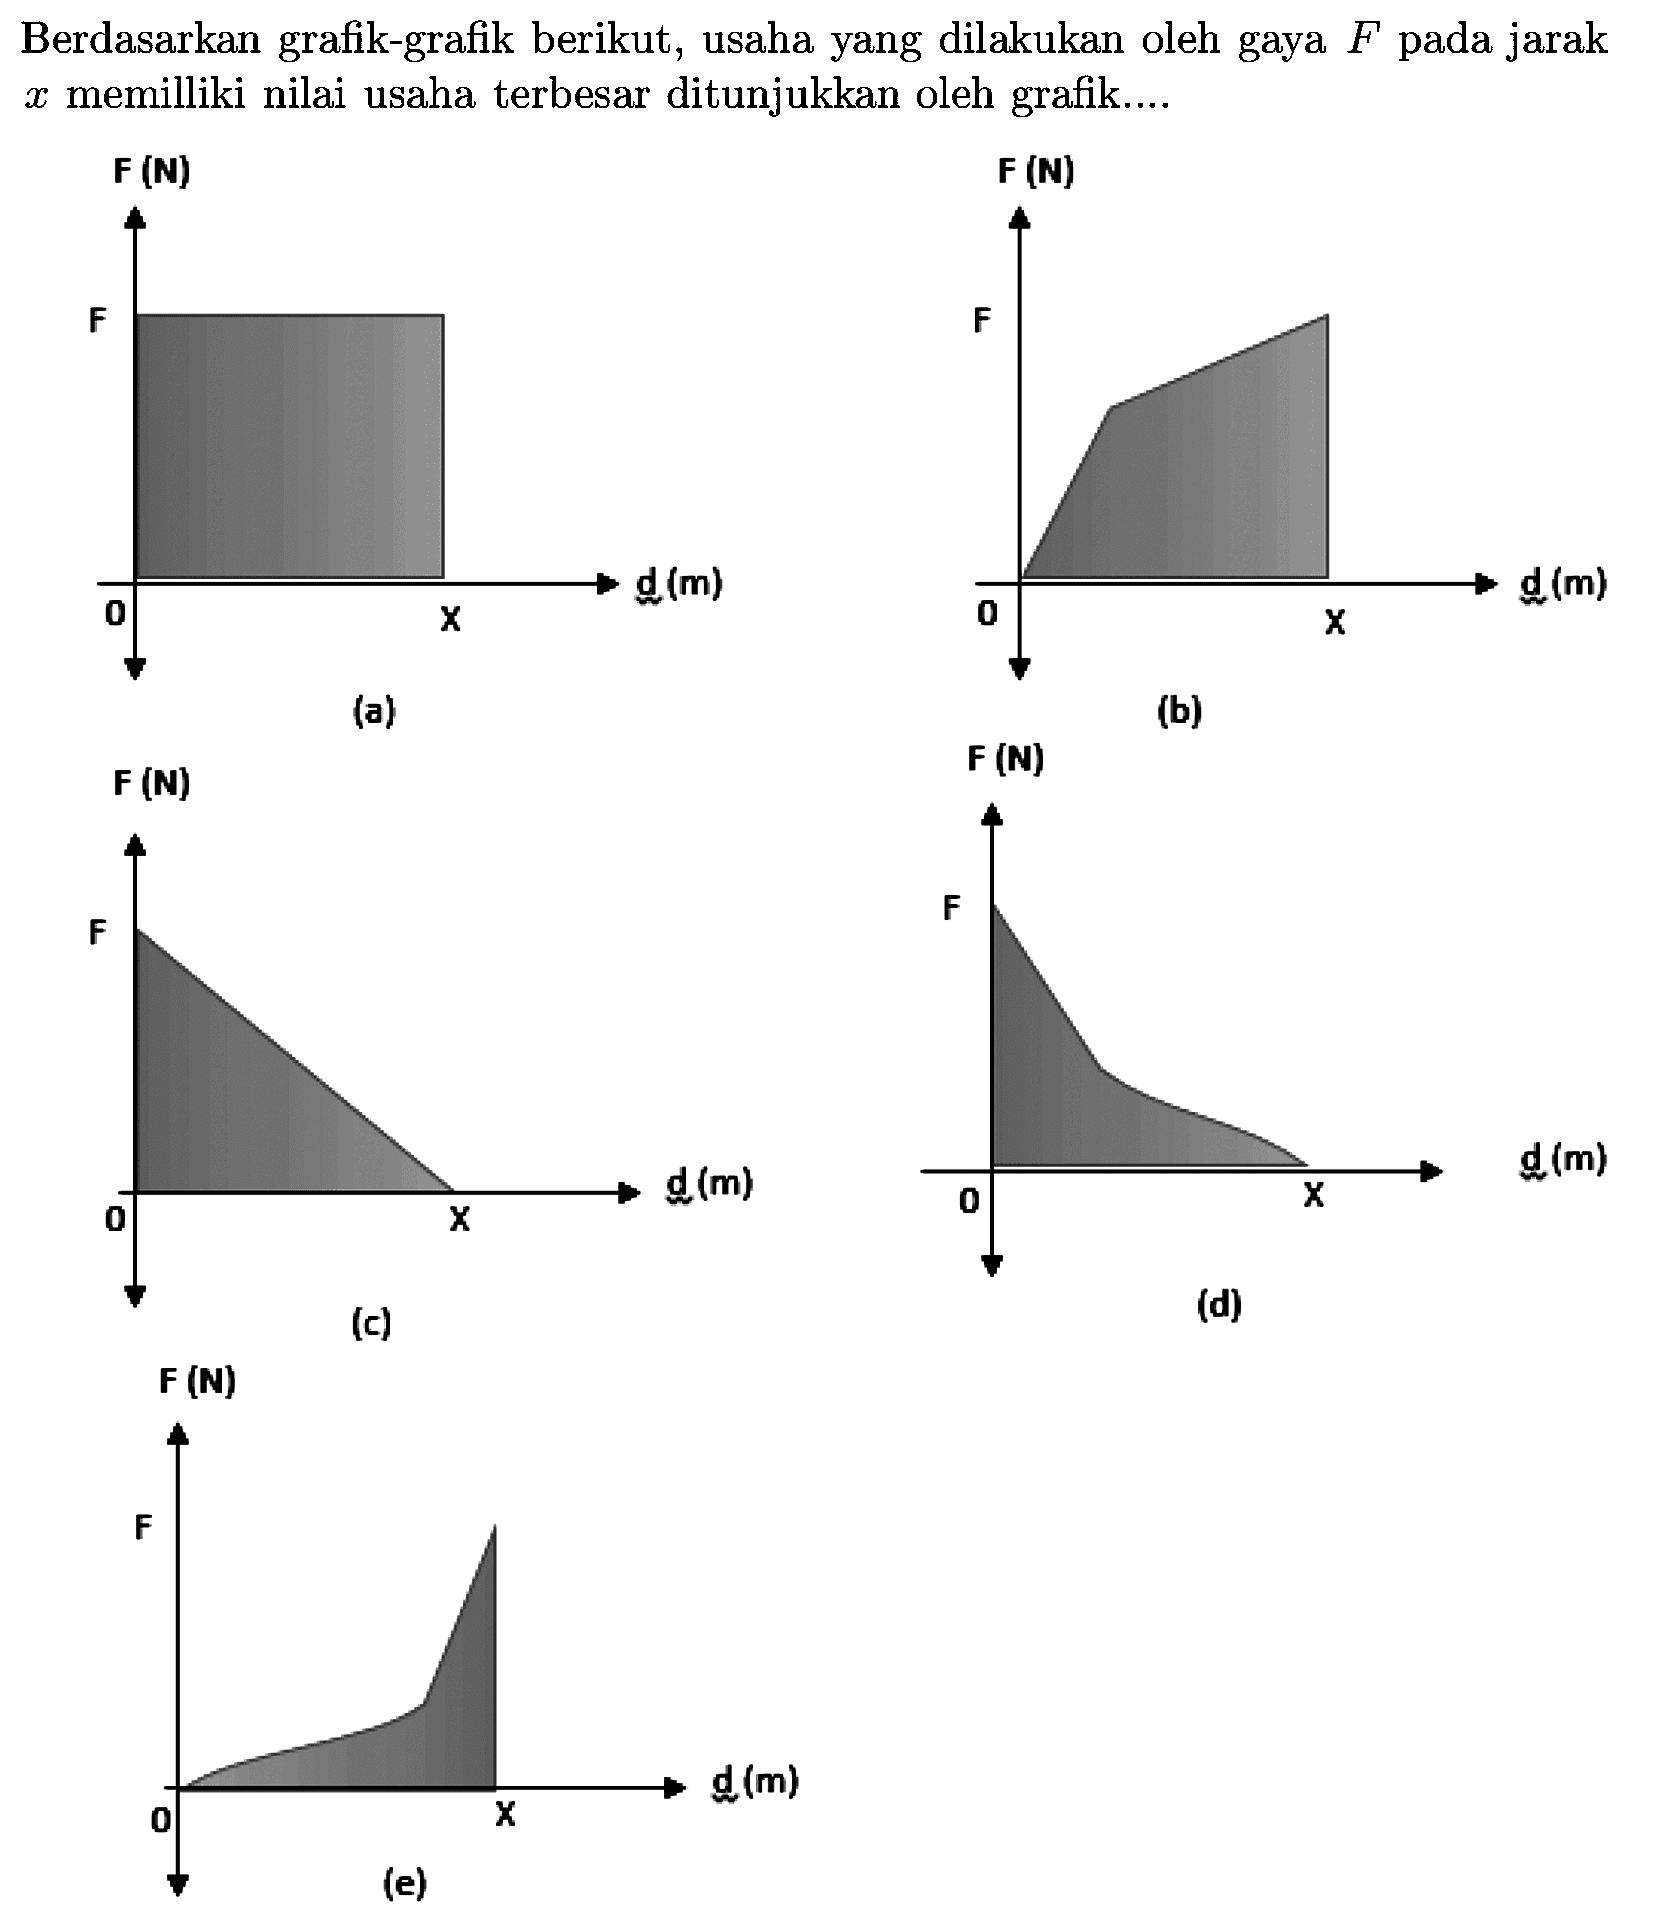 Berdasarkan grafik-grafik berikut, usaha yang dilakukan oleh gaya  F  pada jarak  x  memilliki nilai usaha terbesar ditunjukkan oleh grafik...
F (N)
(c)
(d)